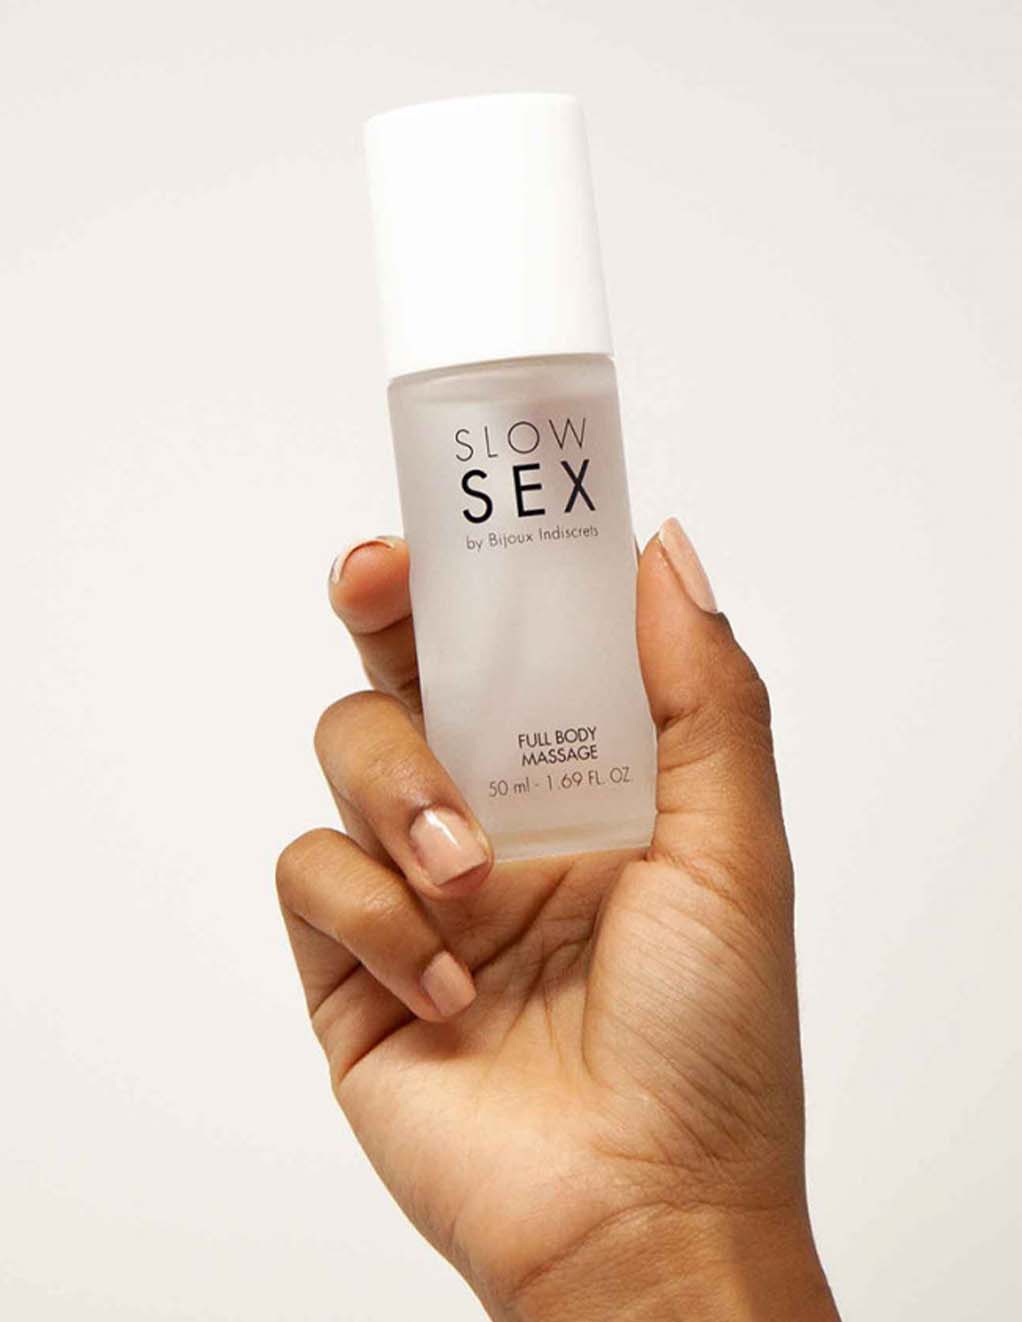 Slow Sex Full Body Massage- in hand